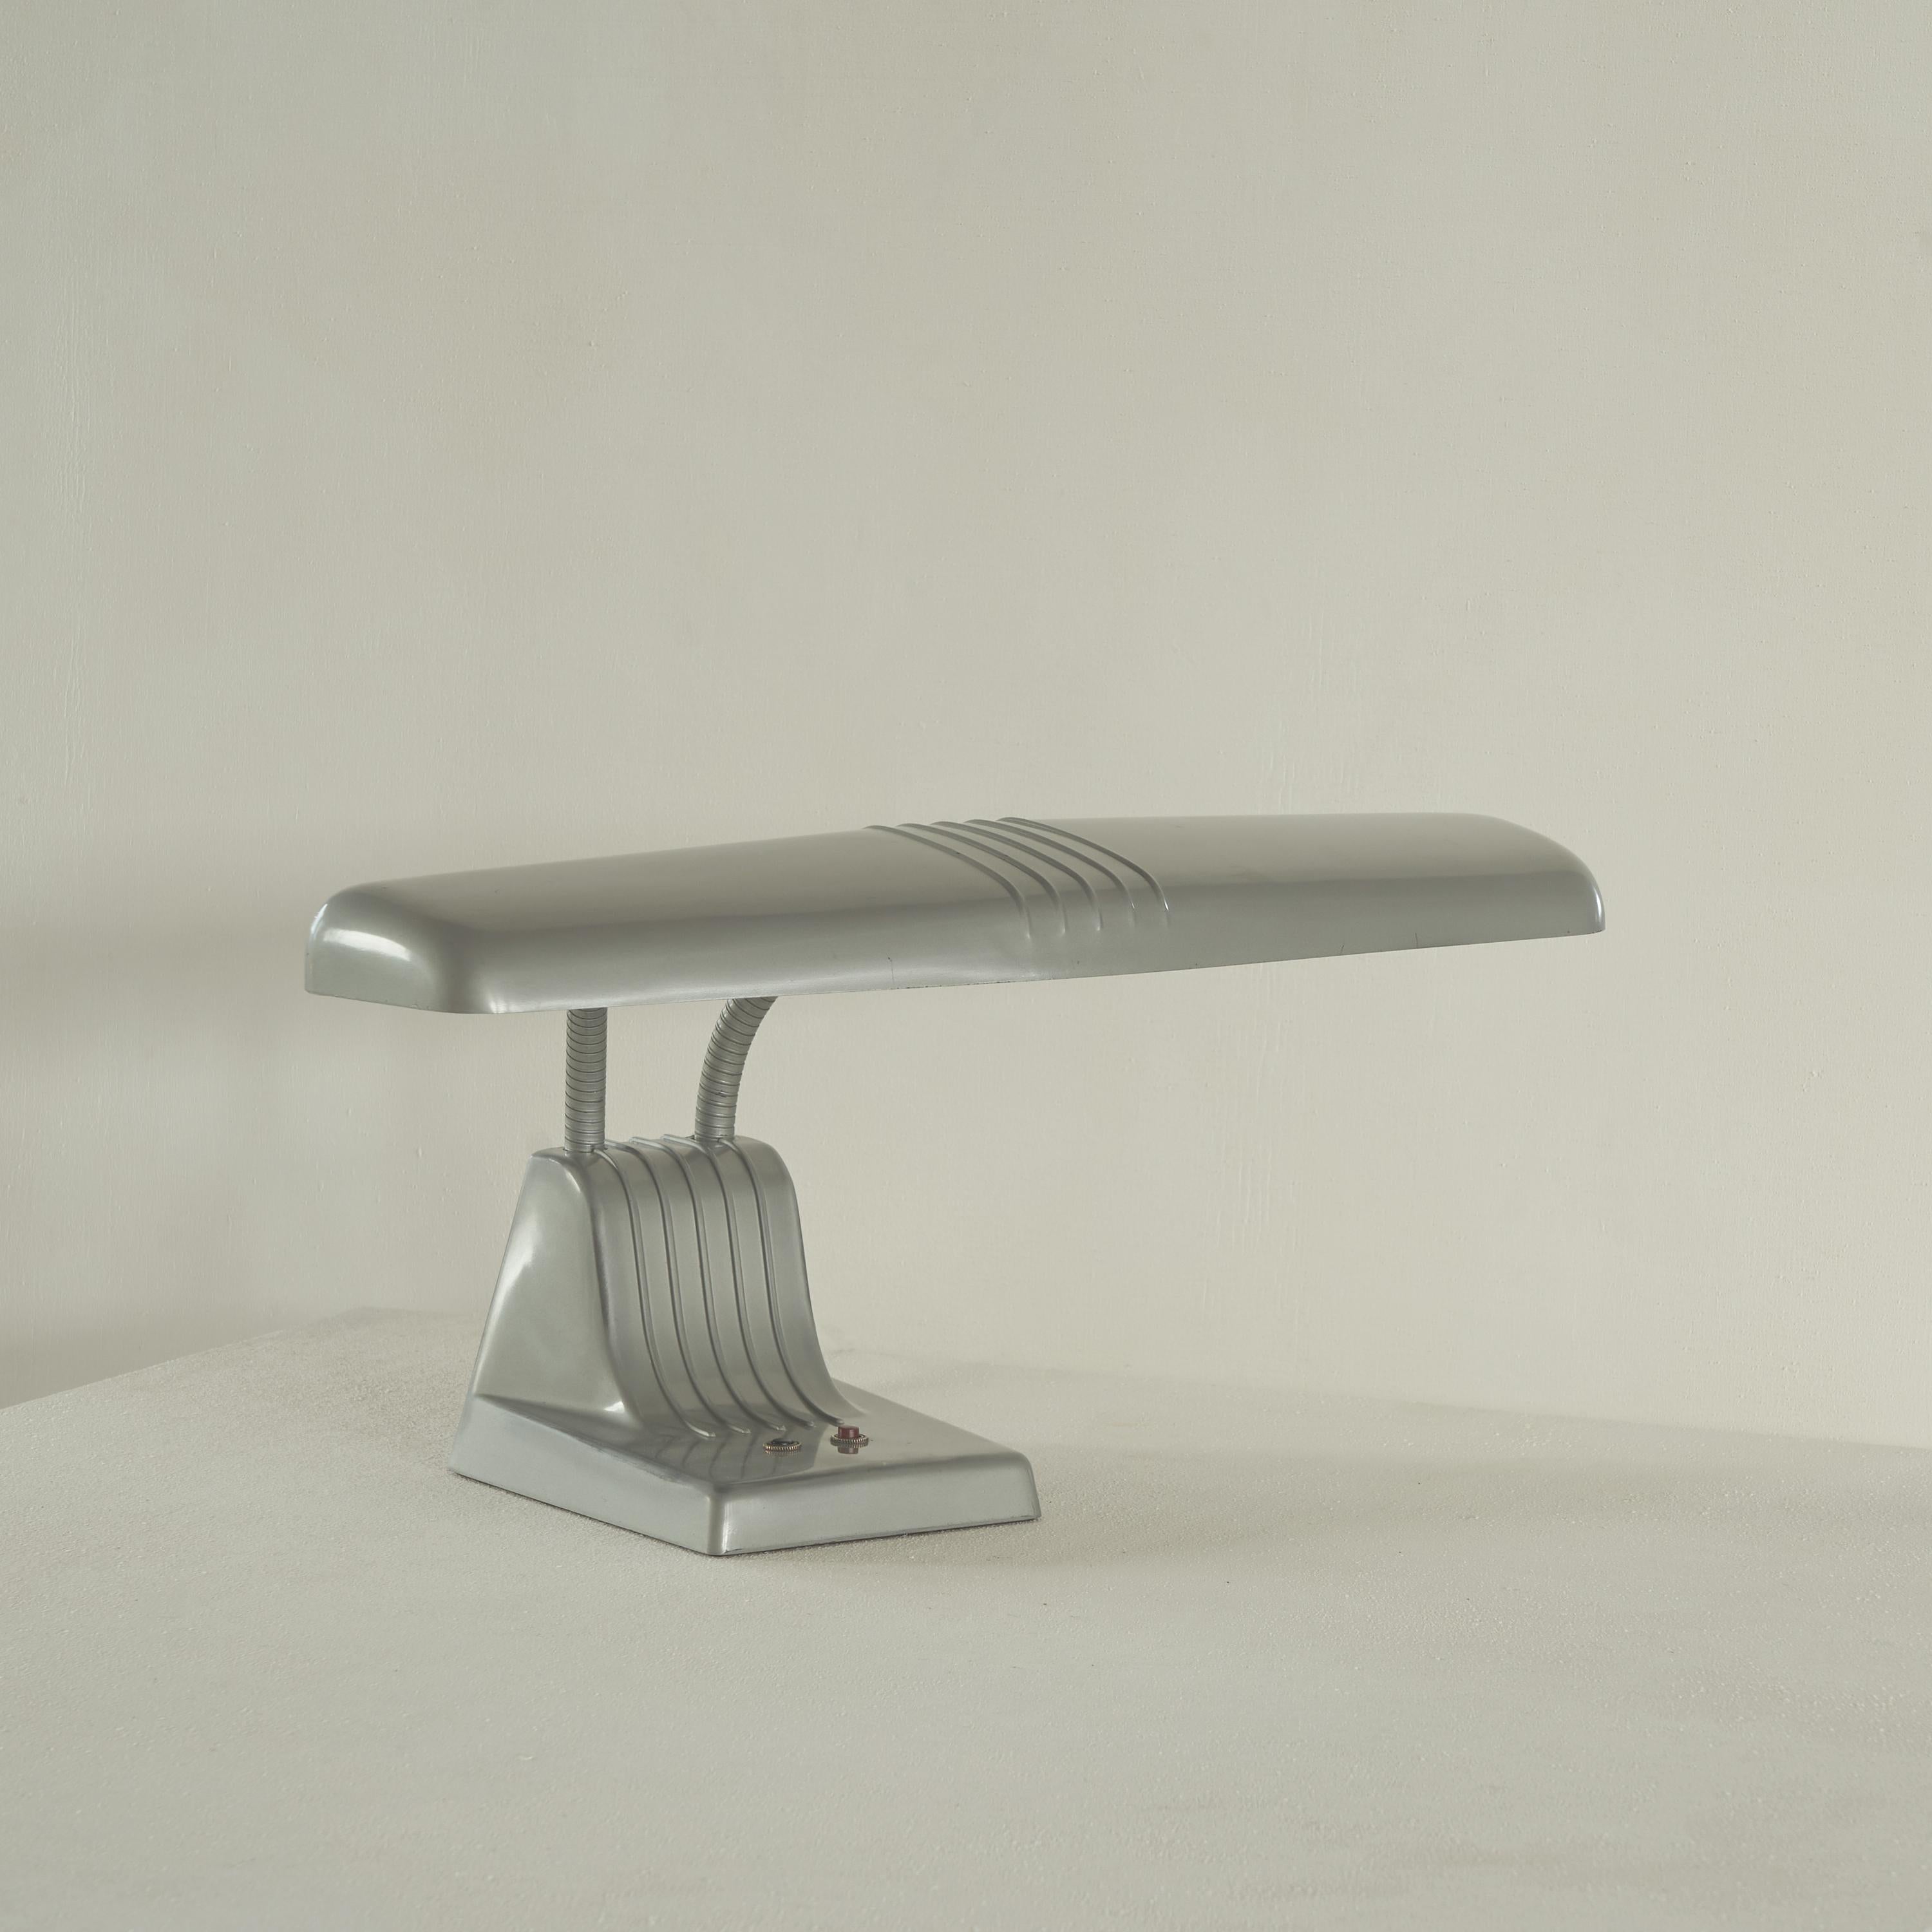 American Dazor Model 1000 Industrial Desk Lamp 1950s For Sale